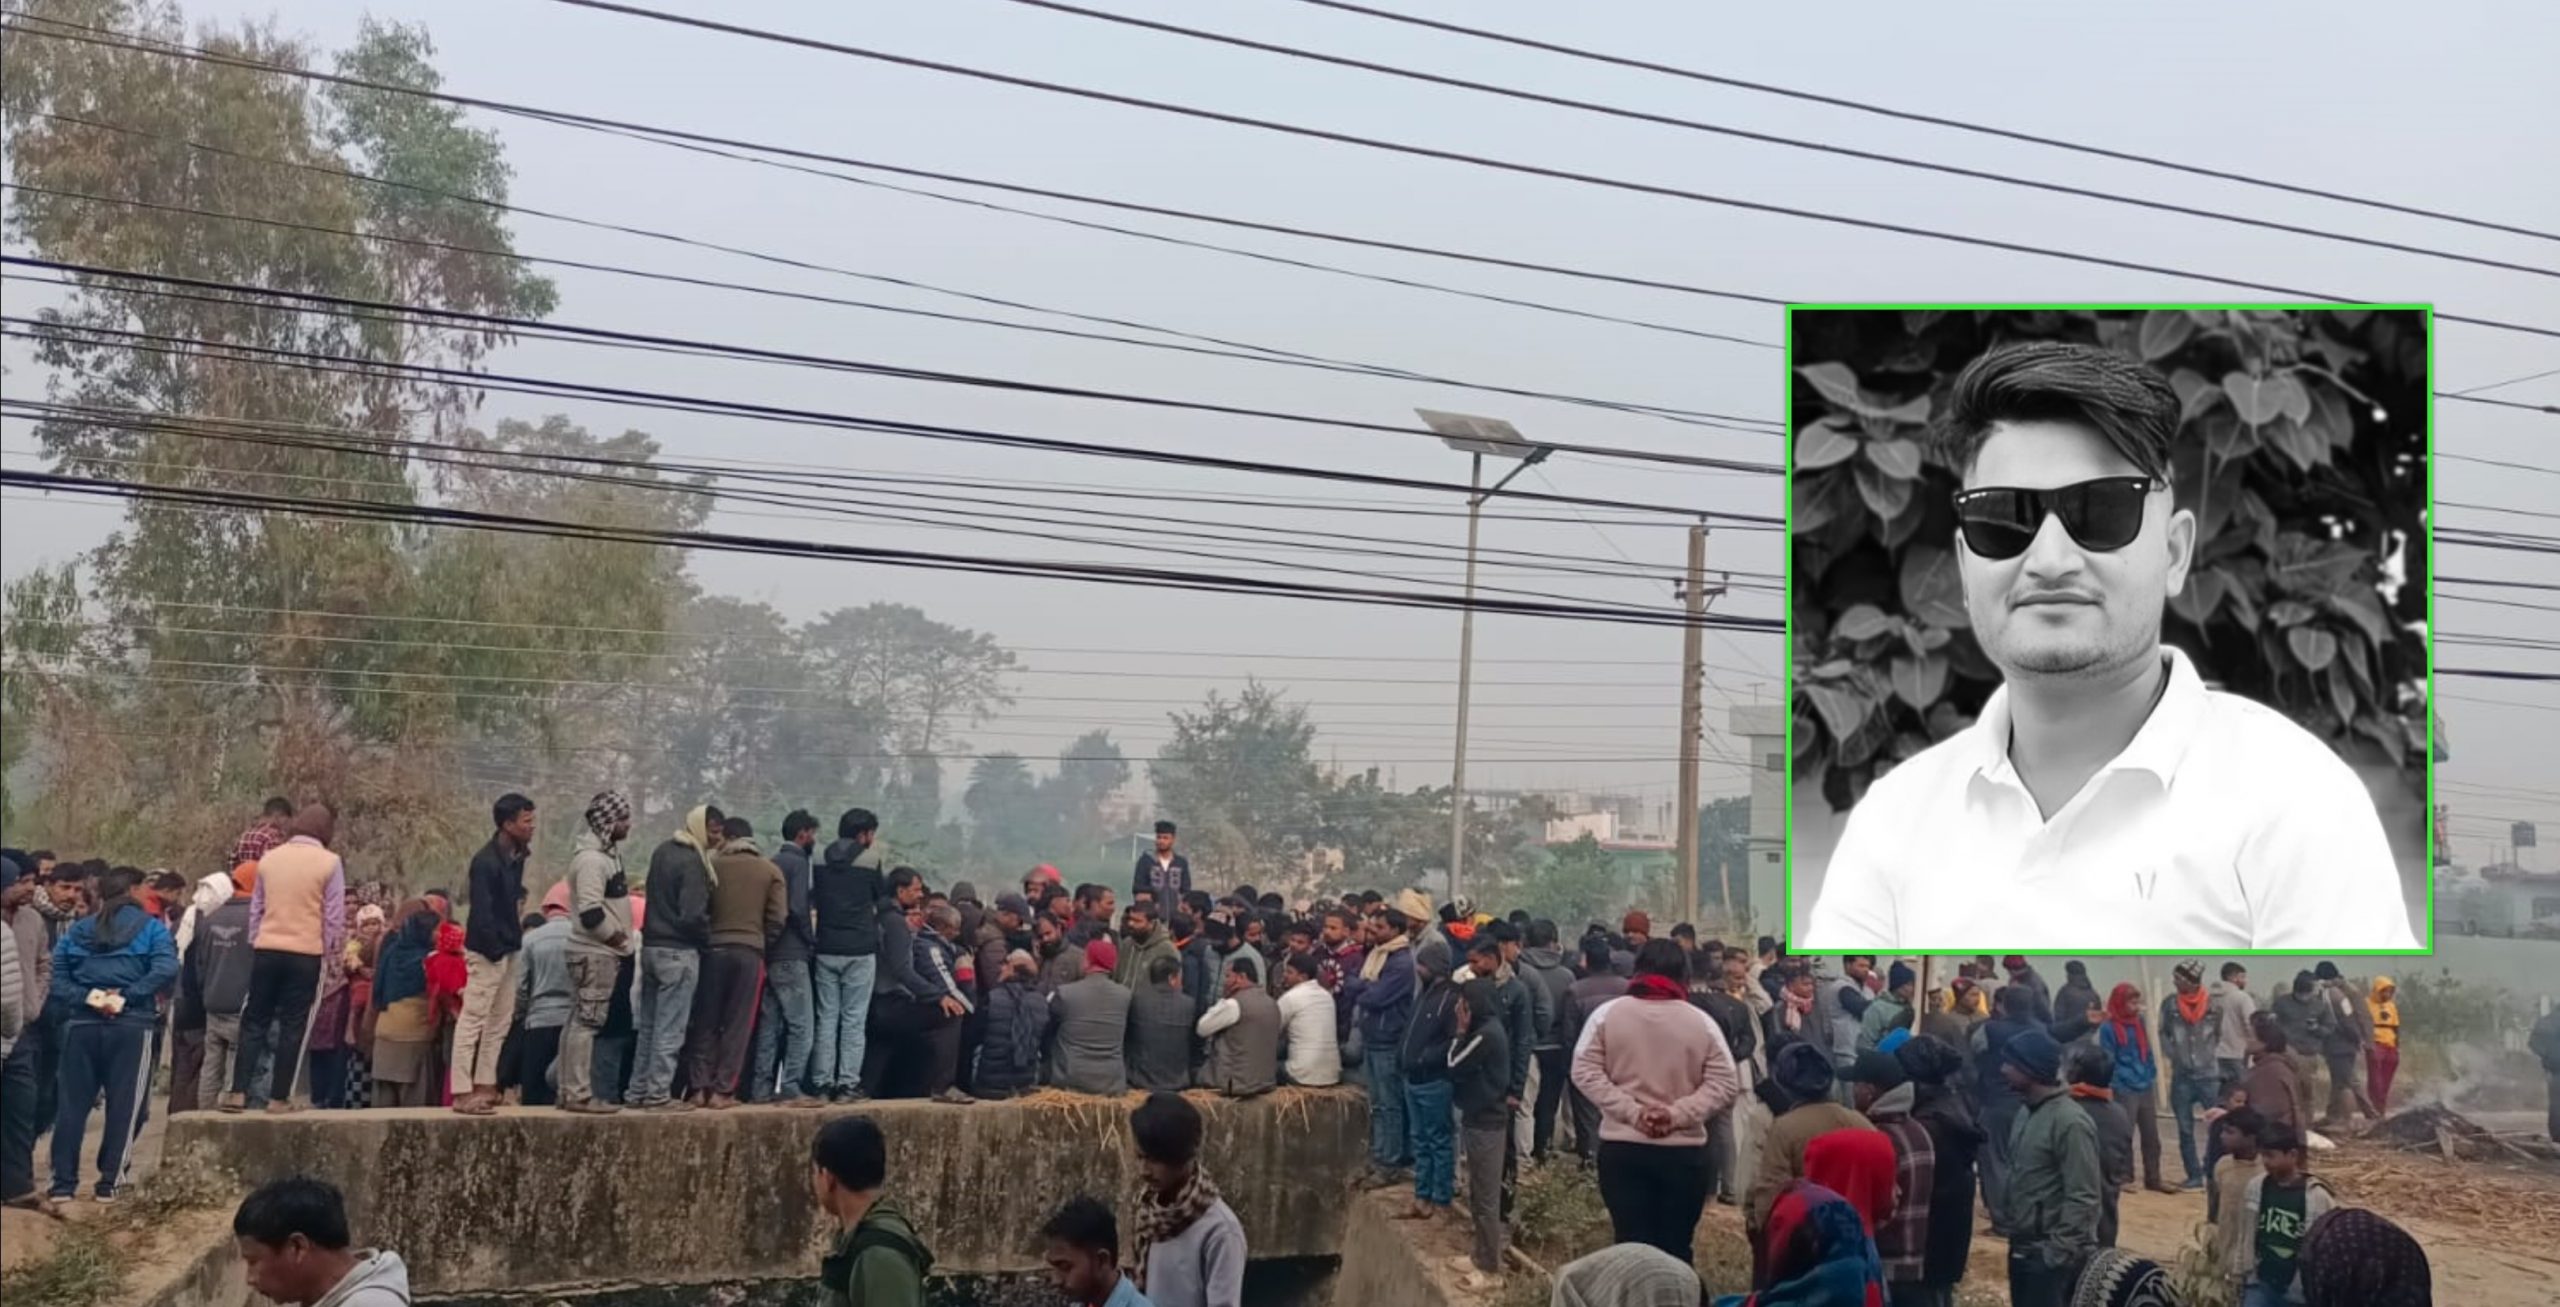 Sarlahi incident: Govt decides to provide 1 million, Jaishankar’s body lies at incident site for 3 days